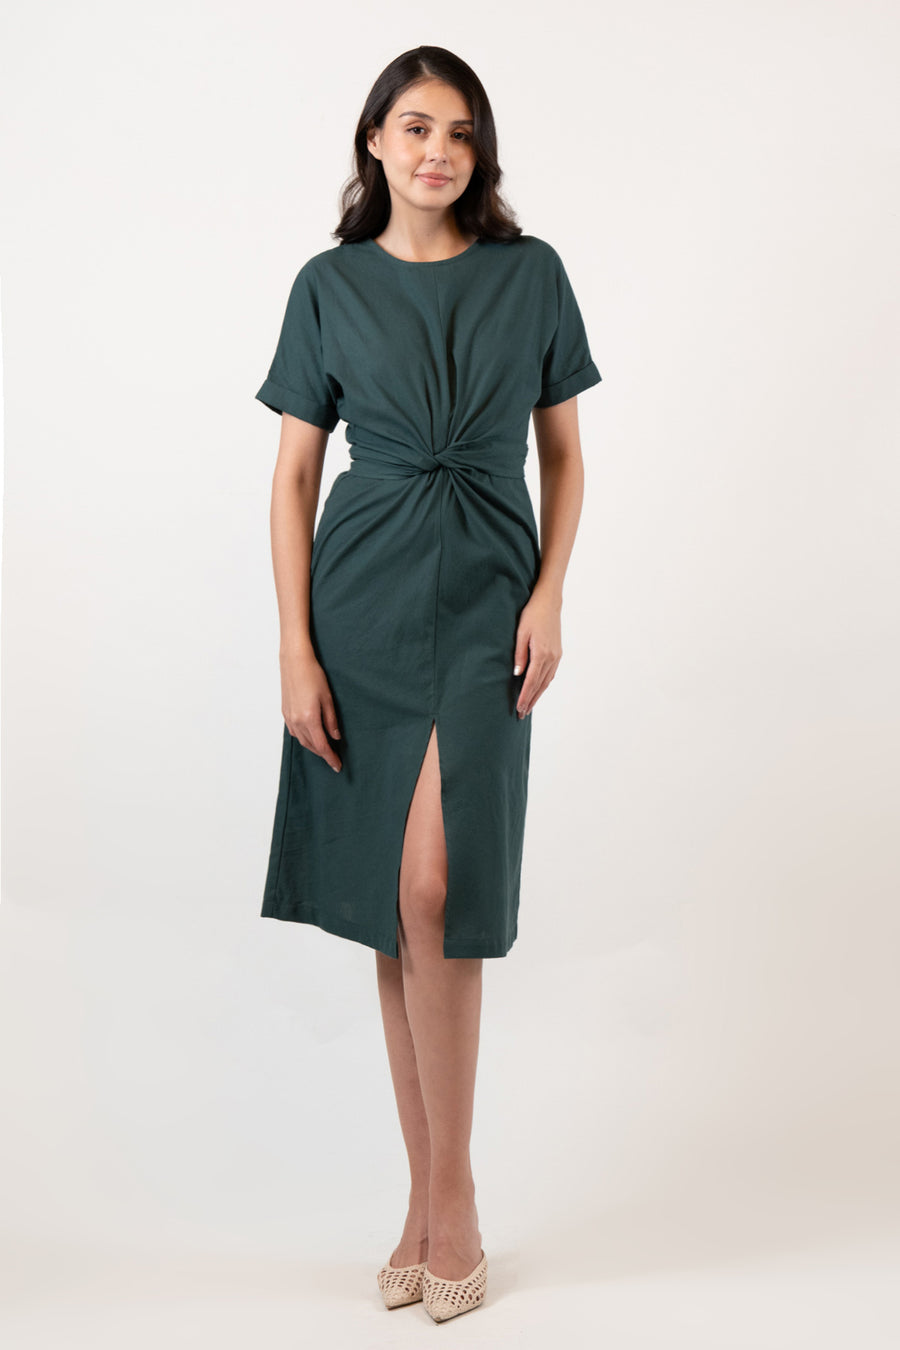 ANAMALAI Twist Front Slit Dress (Forest Green)